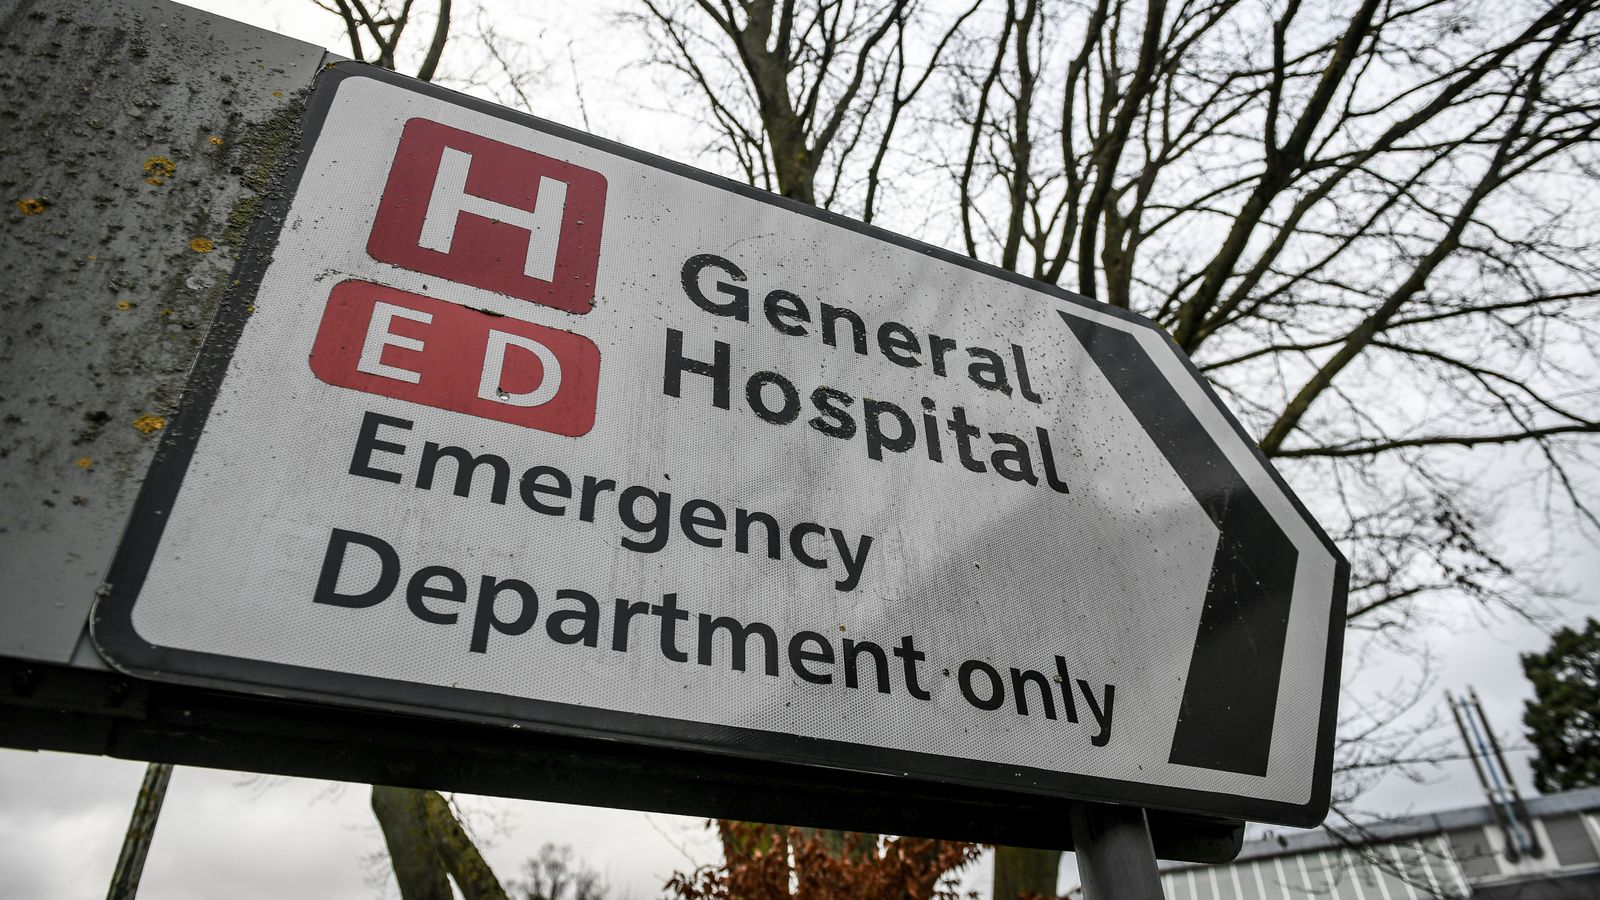 Boris Johnson’s 40 New Hospitals Pledge Faces Investigation By Spending Watchdog